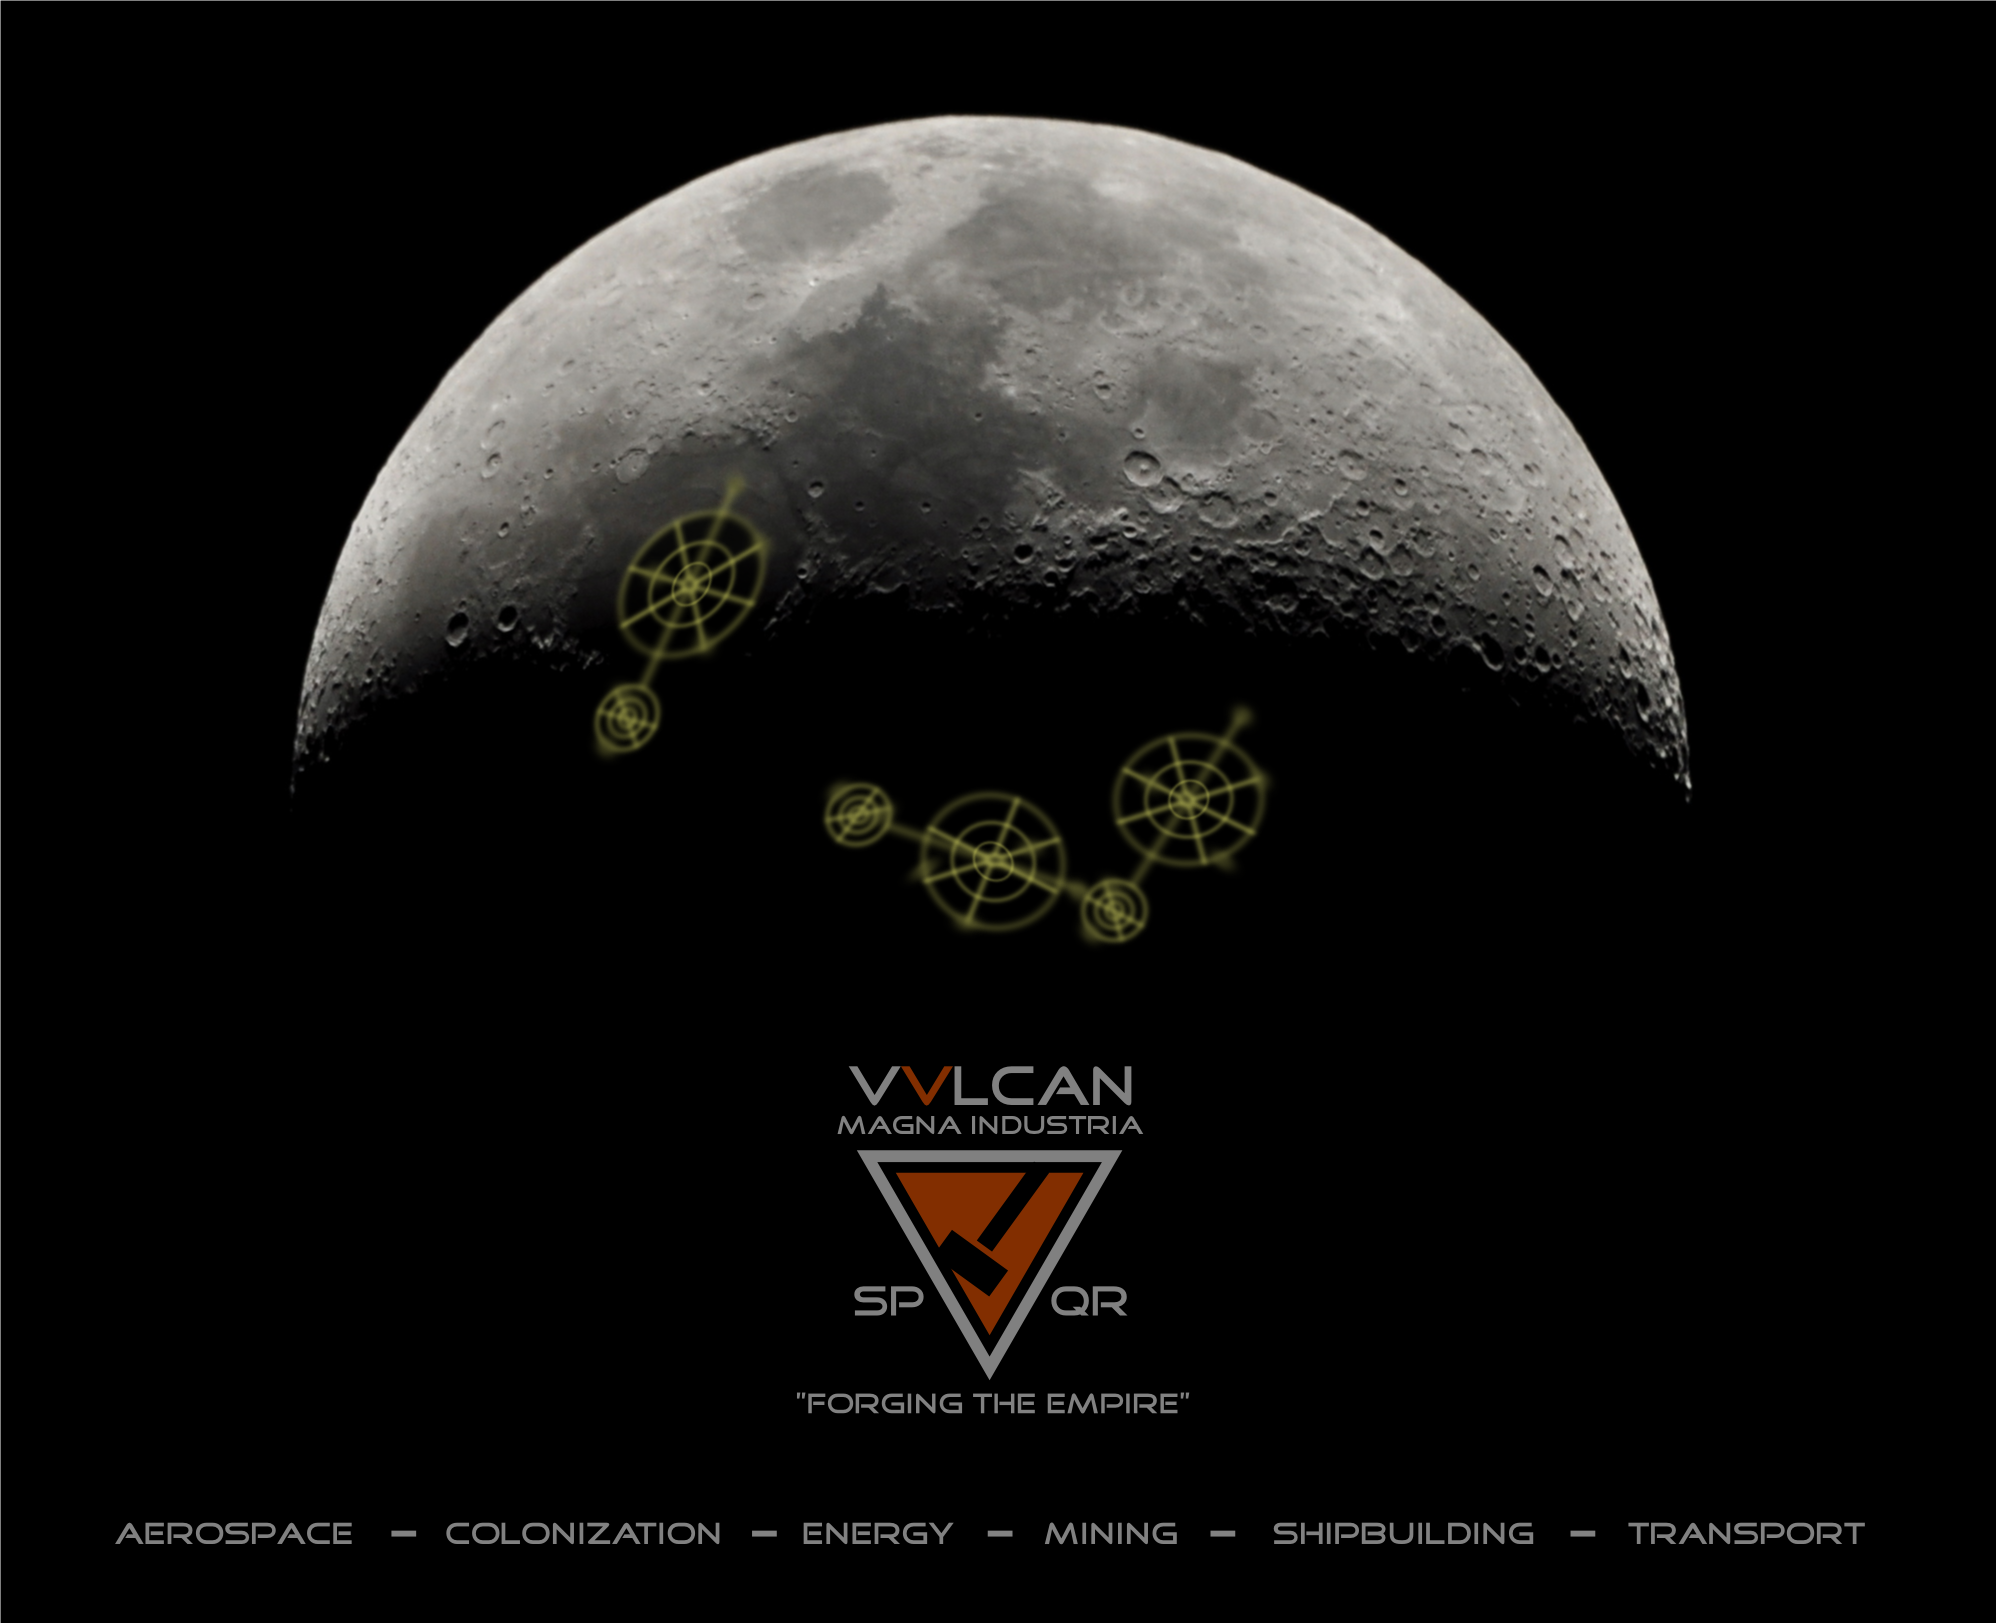 vulcan_heavy_industries___moon_colony_ad_by_rocketmantan-d7dtsd0.png